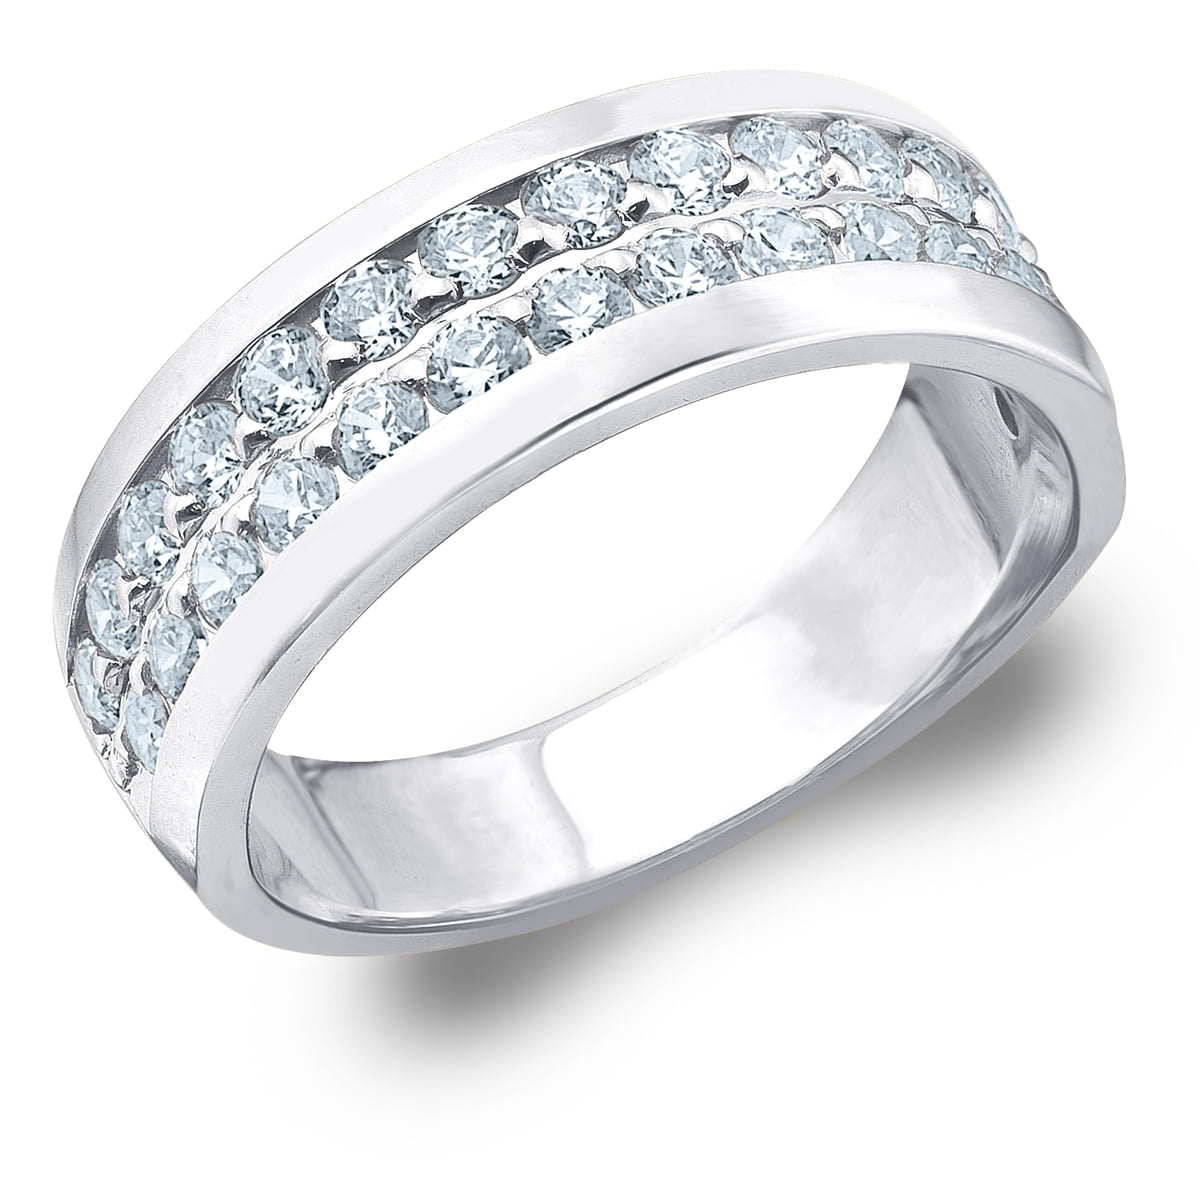 Details about   1.0 CT Round Cut Diamond Engagement Wedding Band Ring 14K White Gold Finish 